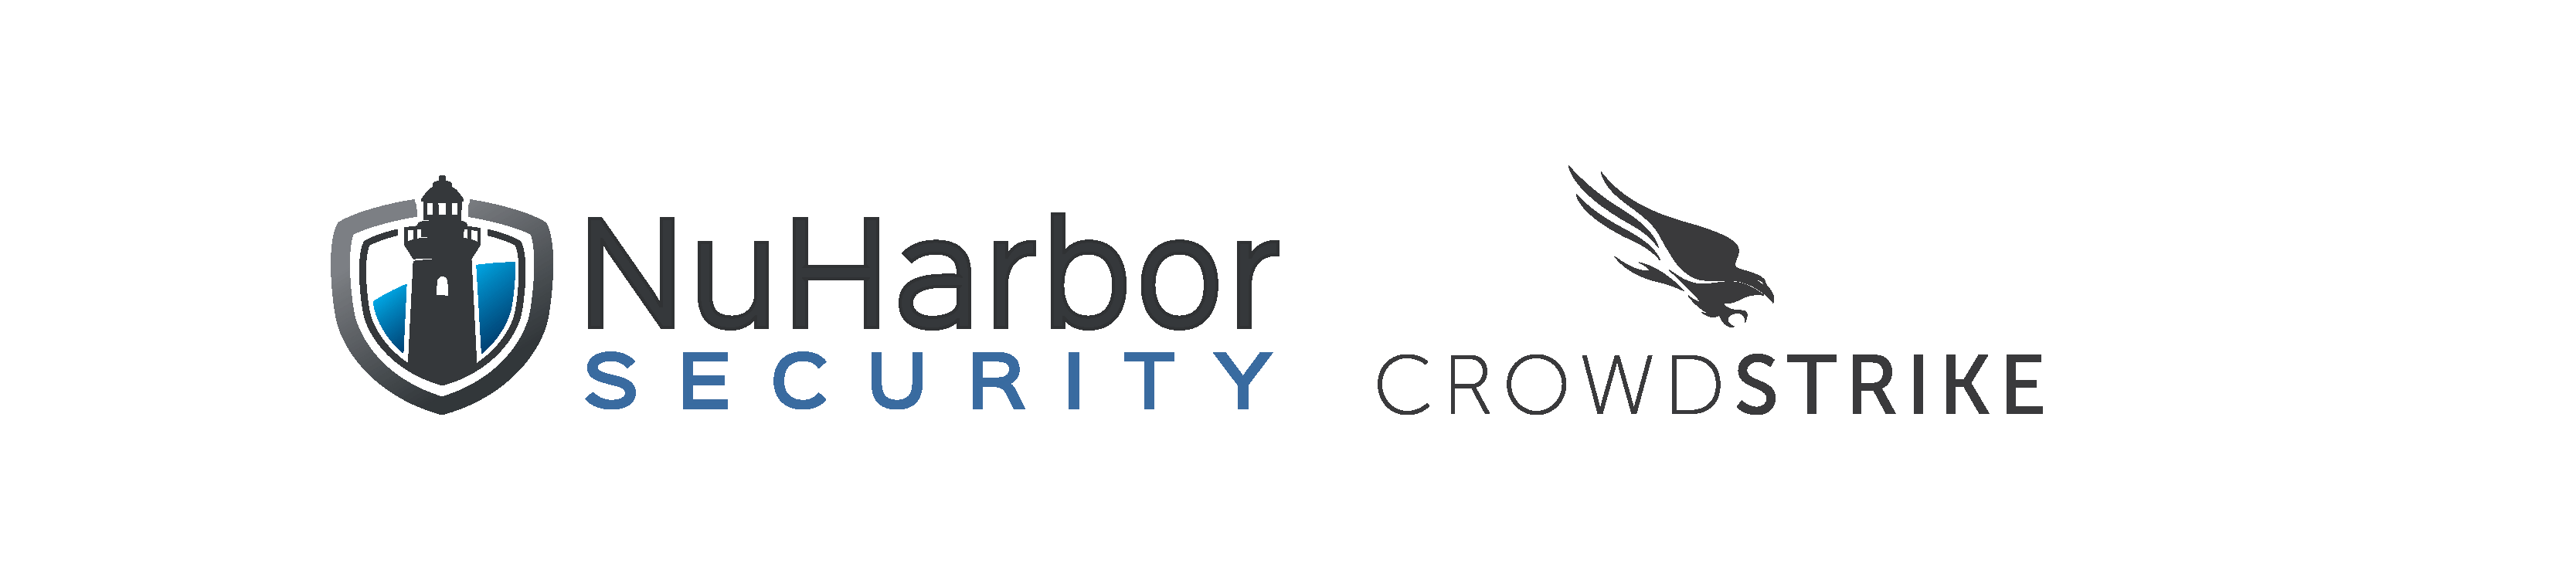 CrowdStrike Logo - NuHarbor CrowdStrike Logo | NuHarbor Security